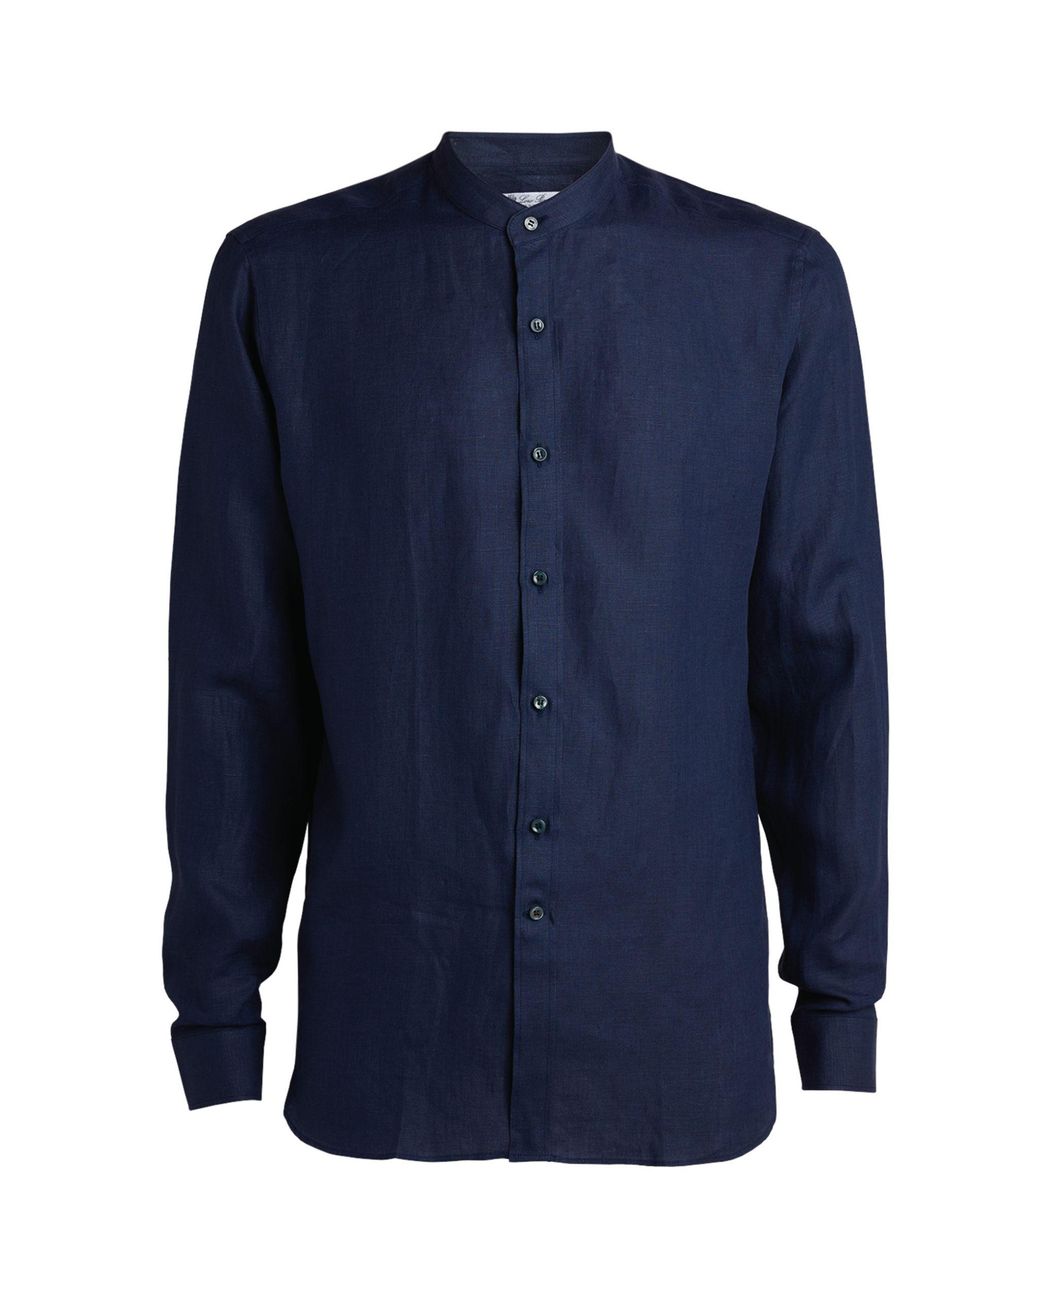 Loro Piana Linen Shirt in Blue for Men - Lyst